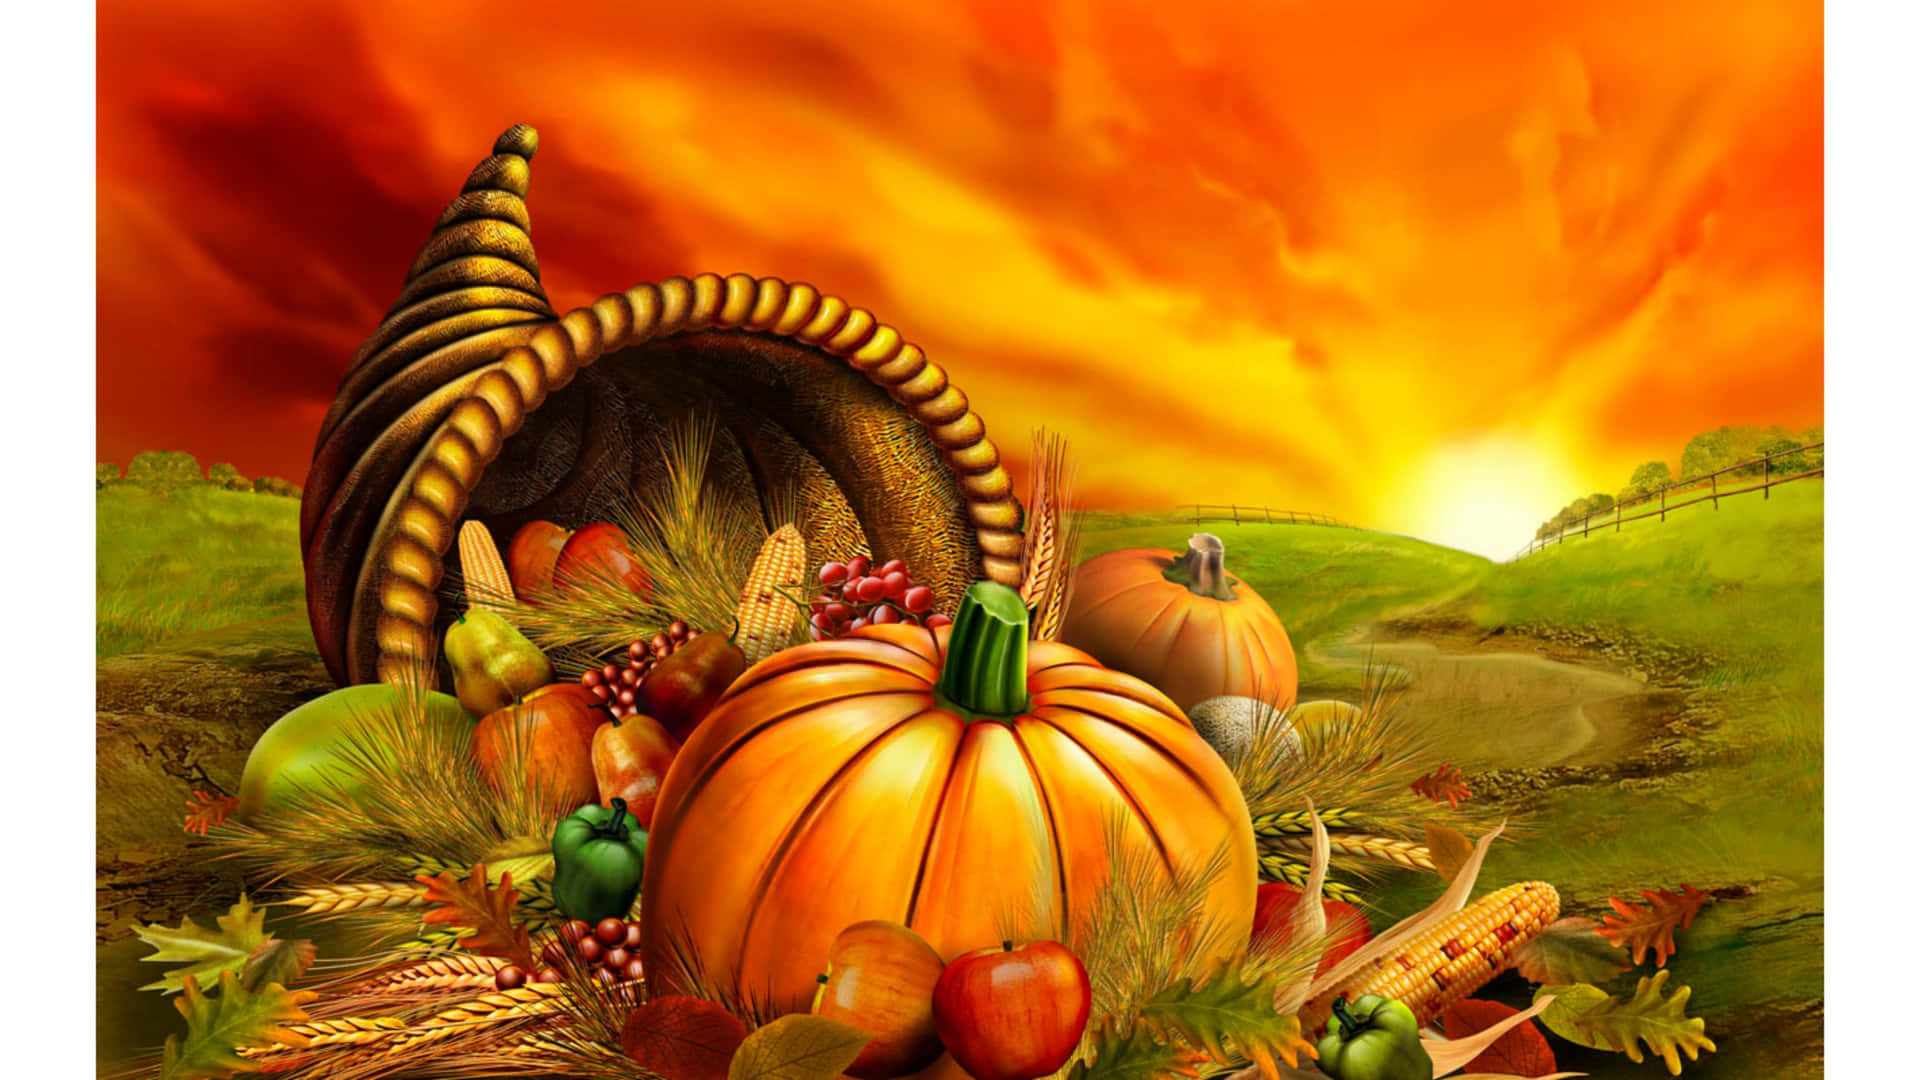 Fresh, ripe pumpkins signal the start of Thanksgiving celebrations. Wallpaper